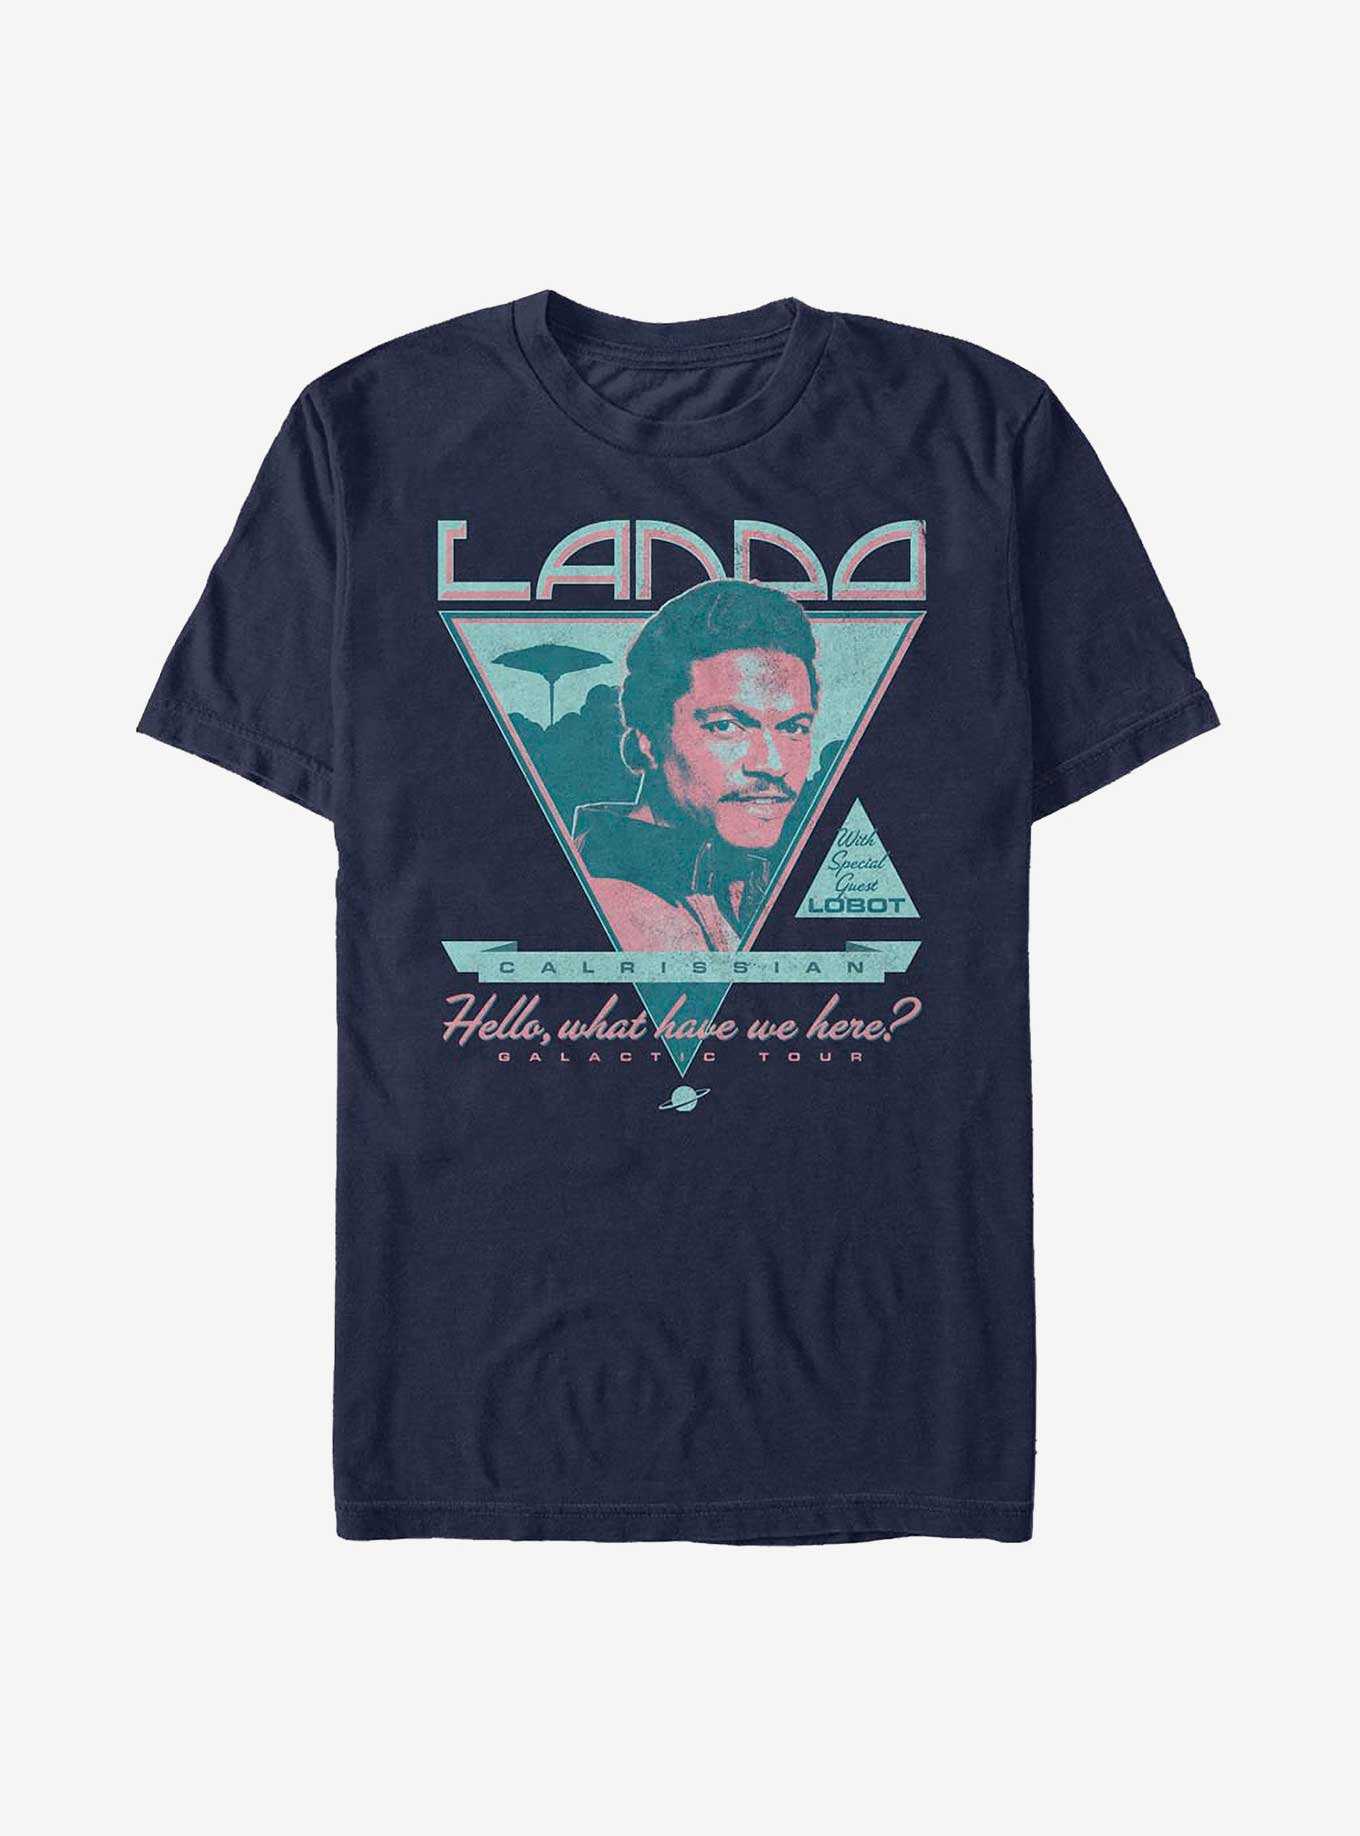 Star Wars Lando Calrissian Galactic Tour T-Shirt, , hi-res